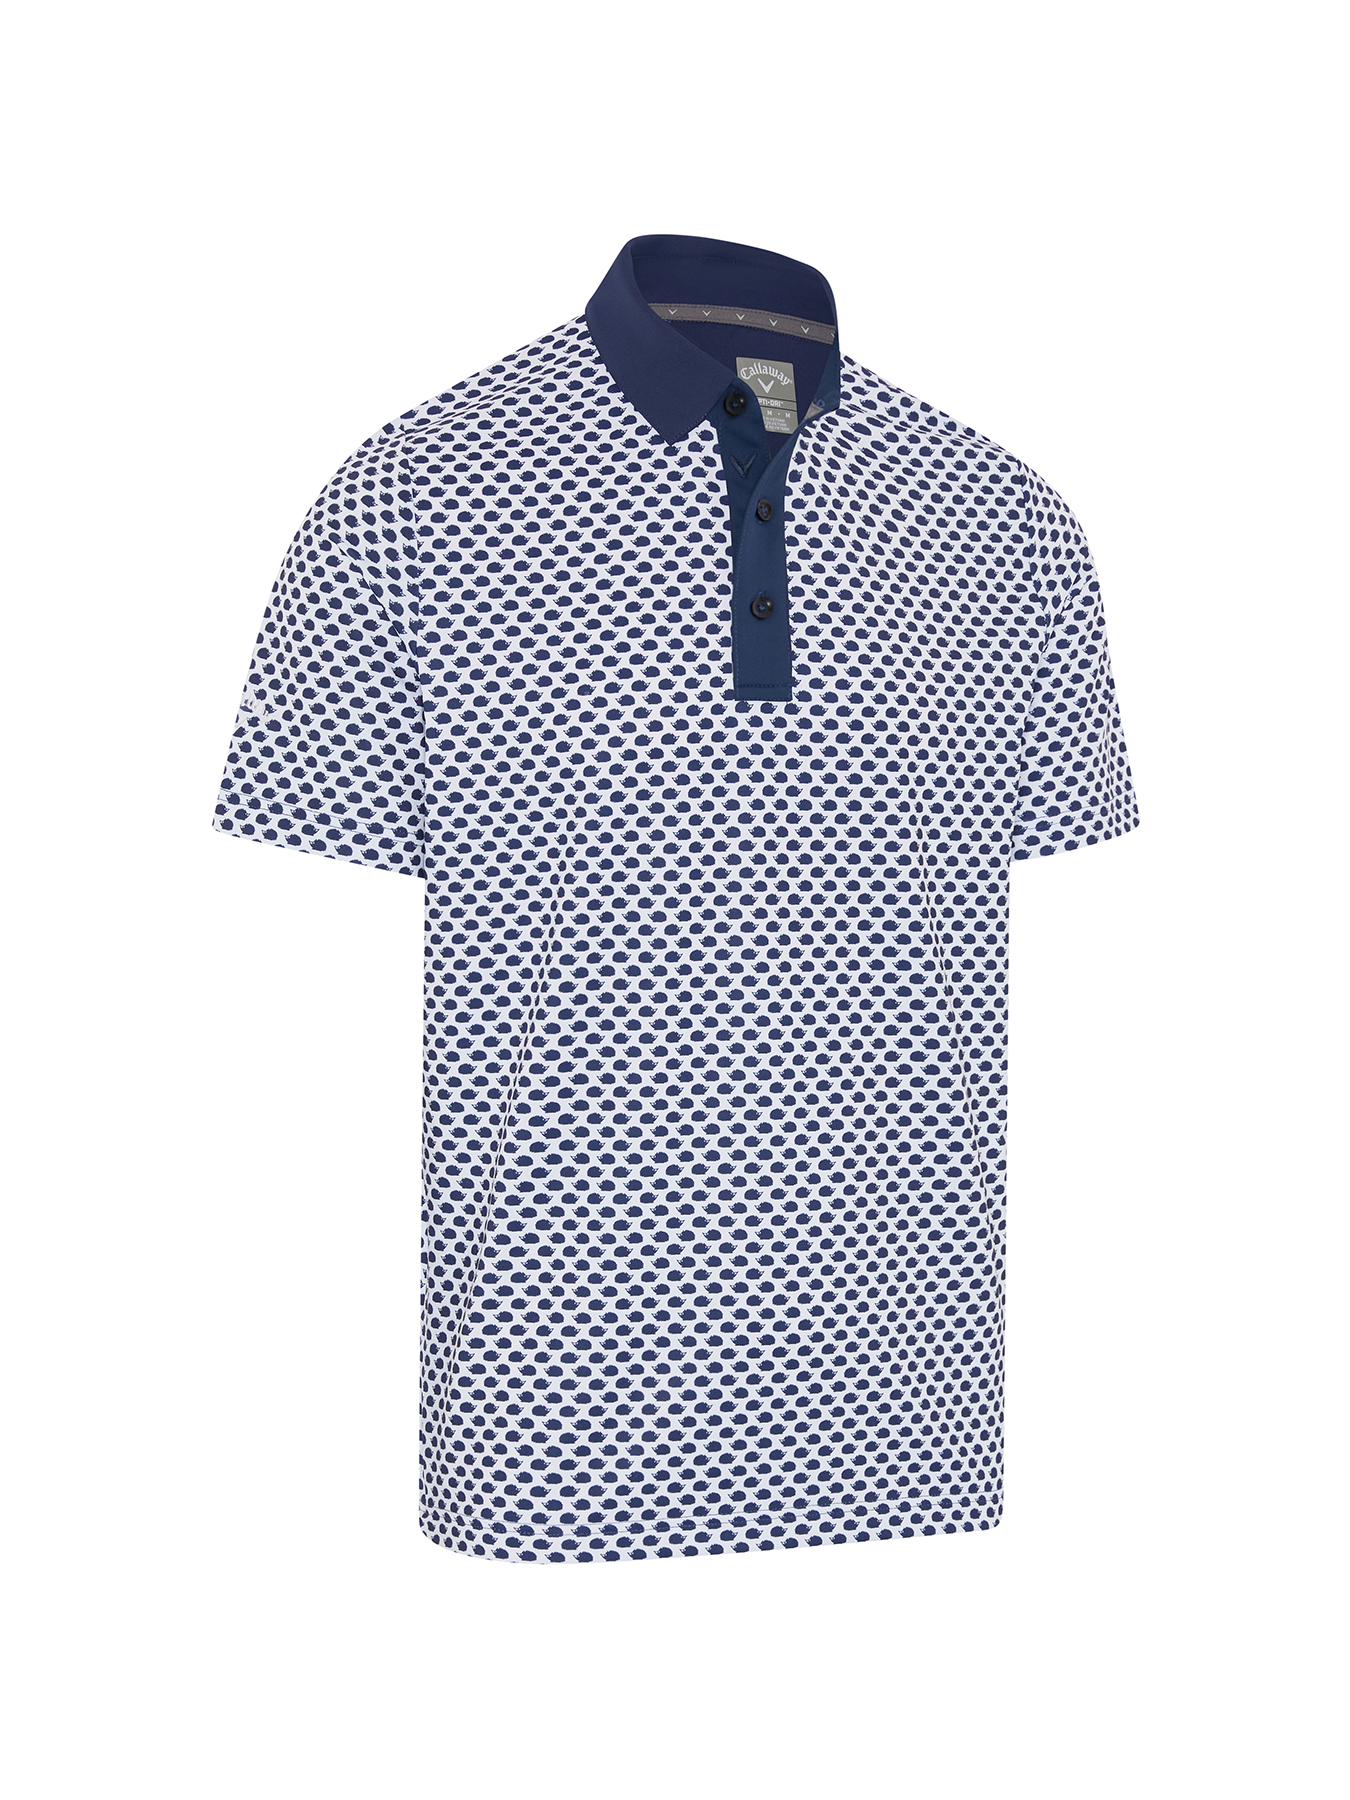 Callaway Hedgehog pánské golfové triko, bílé/tmavě modré, vel. M